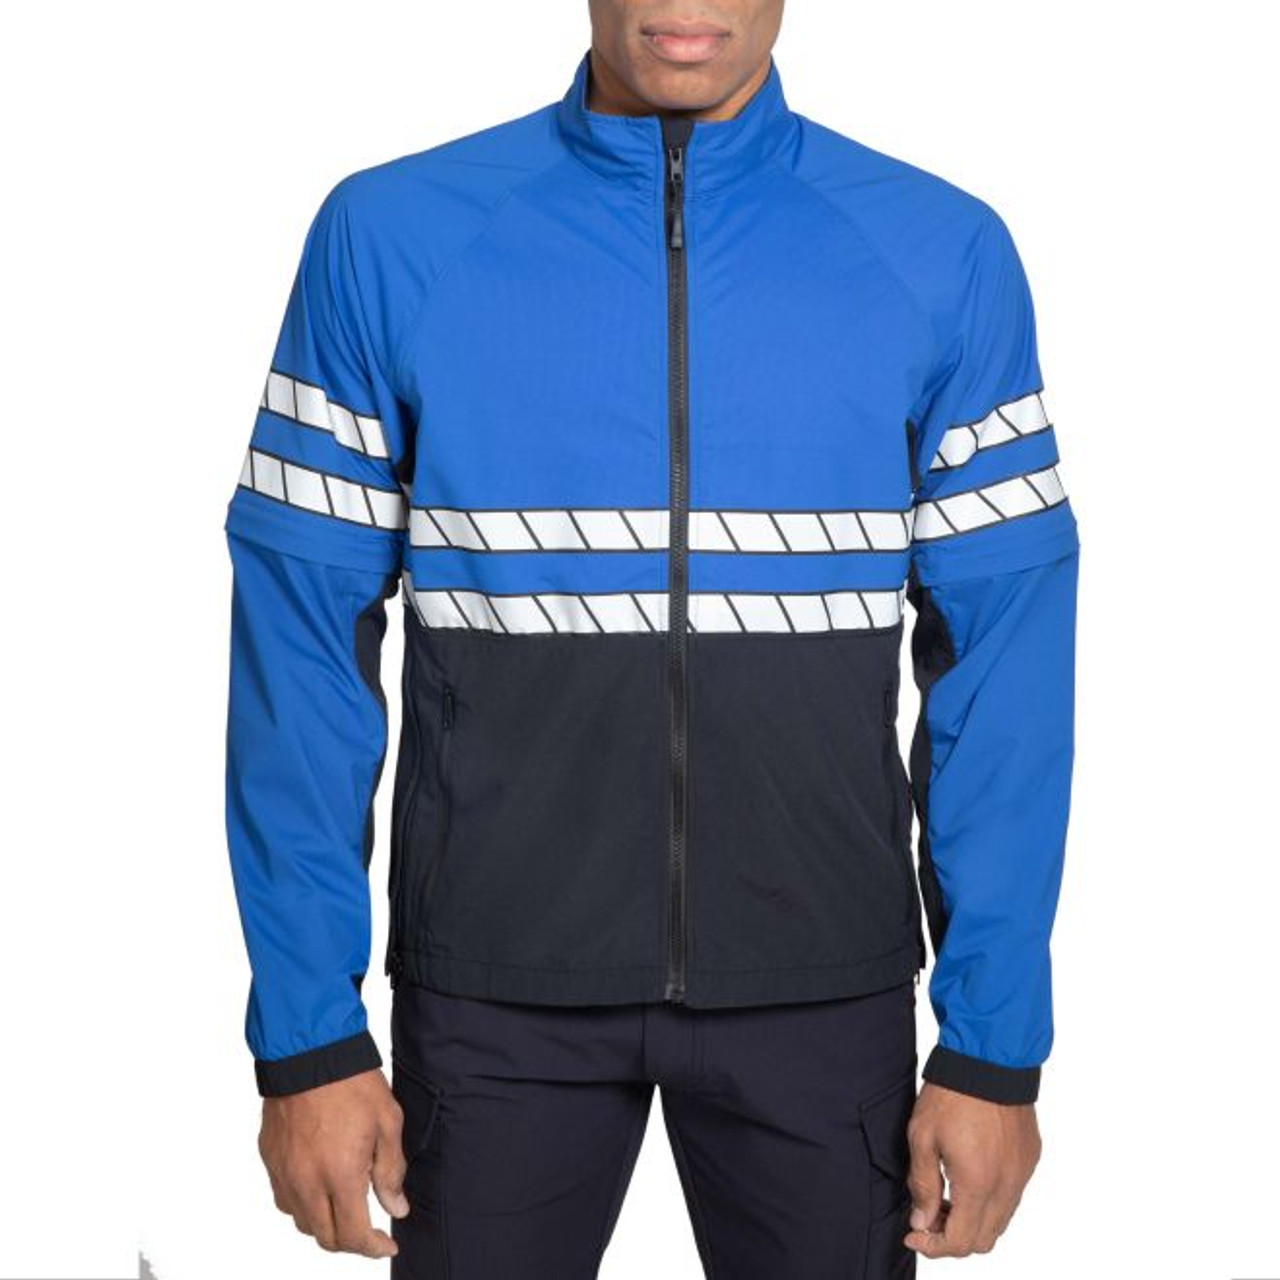 Blauer - Reflective Soft Shell Fleece Jacket (Color Block)